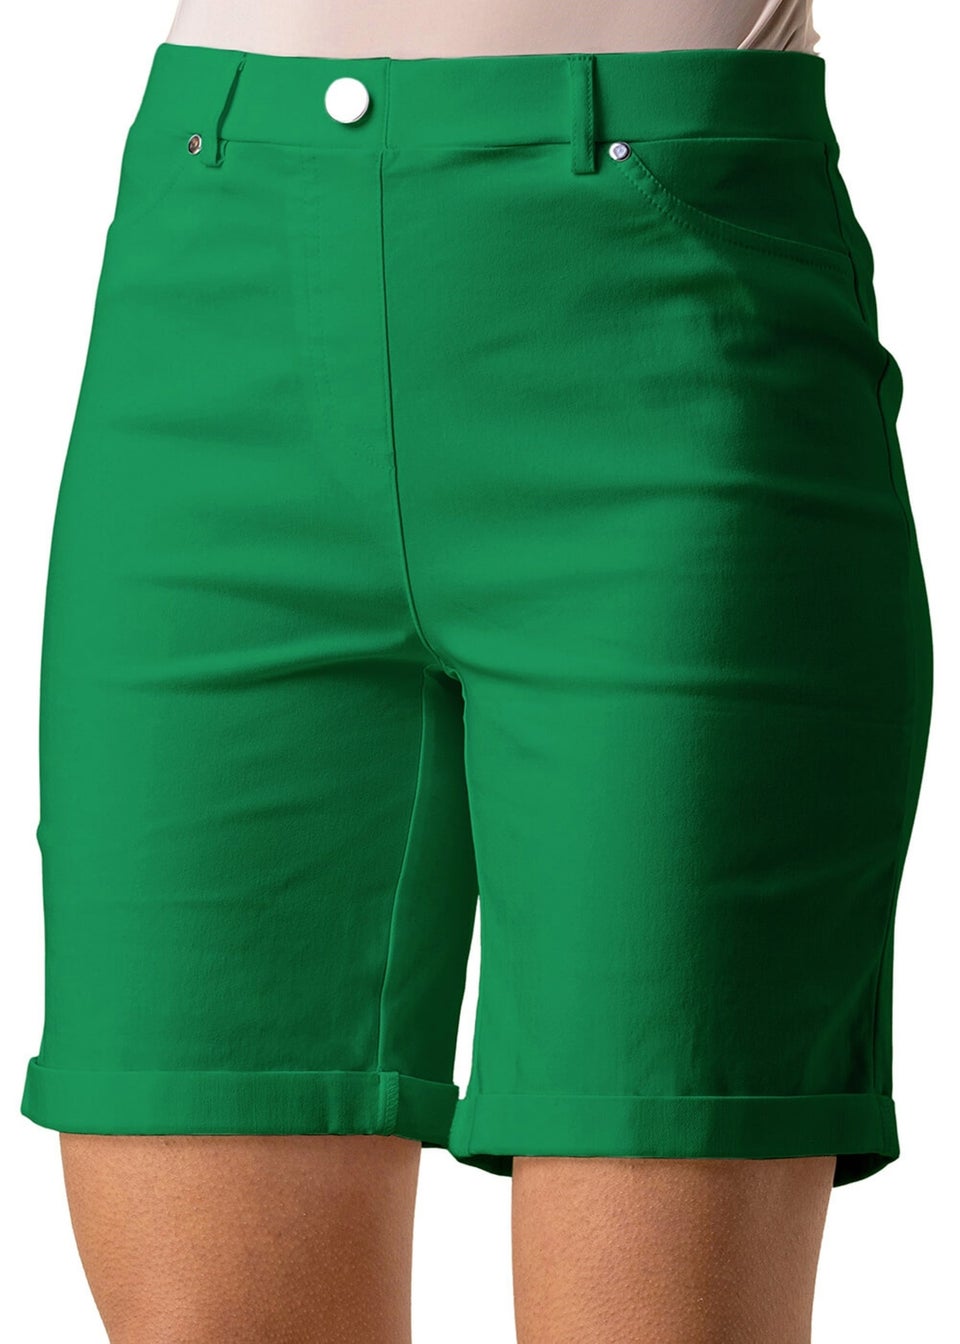 Roman Emerald Turn Up Stretch Shorts